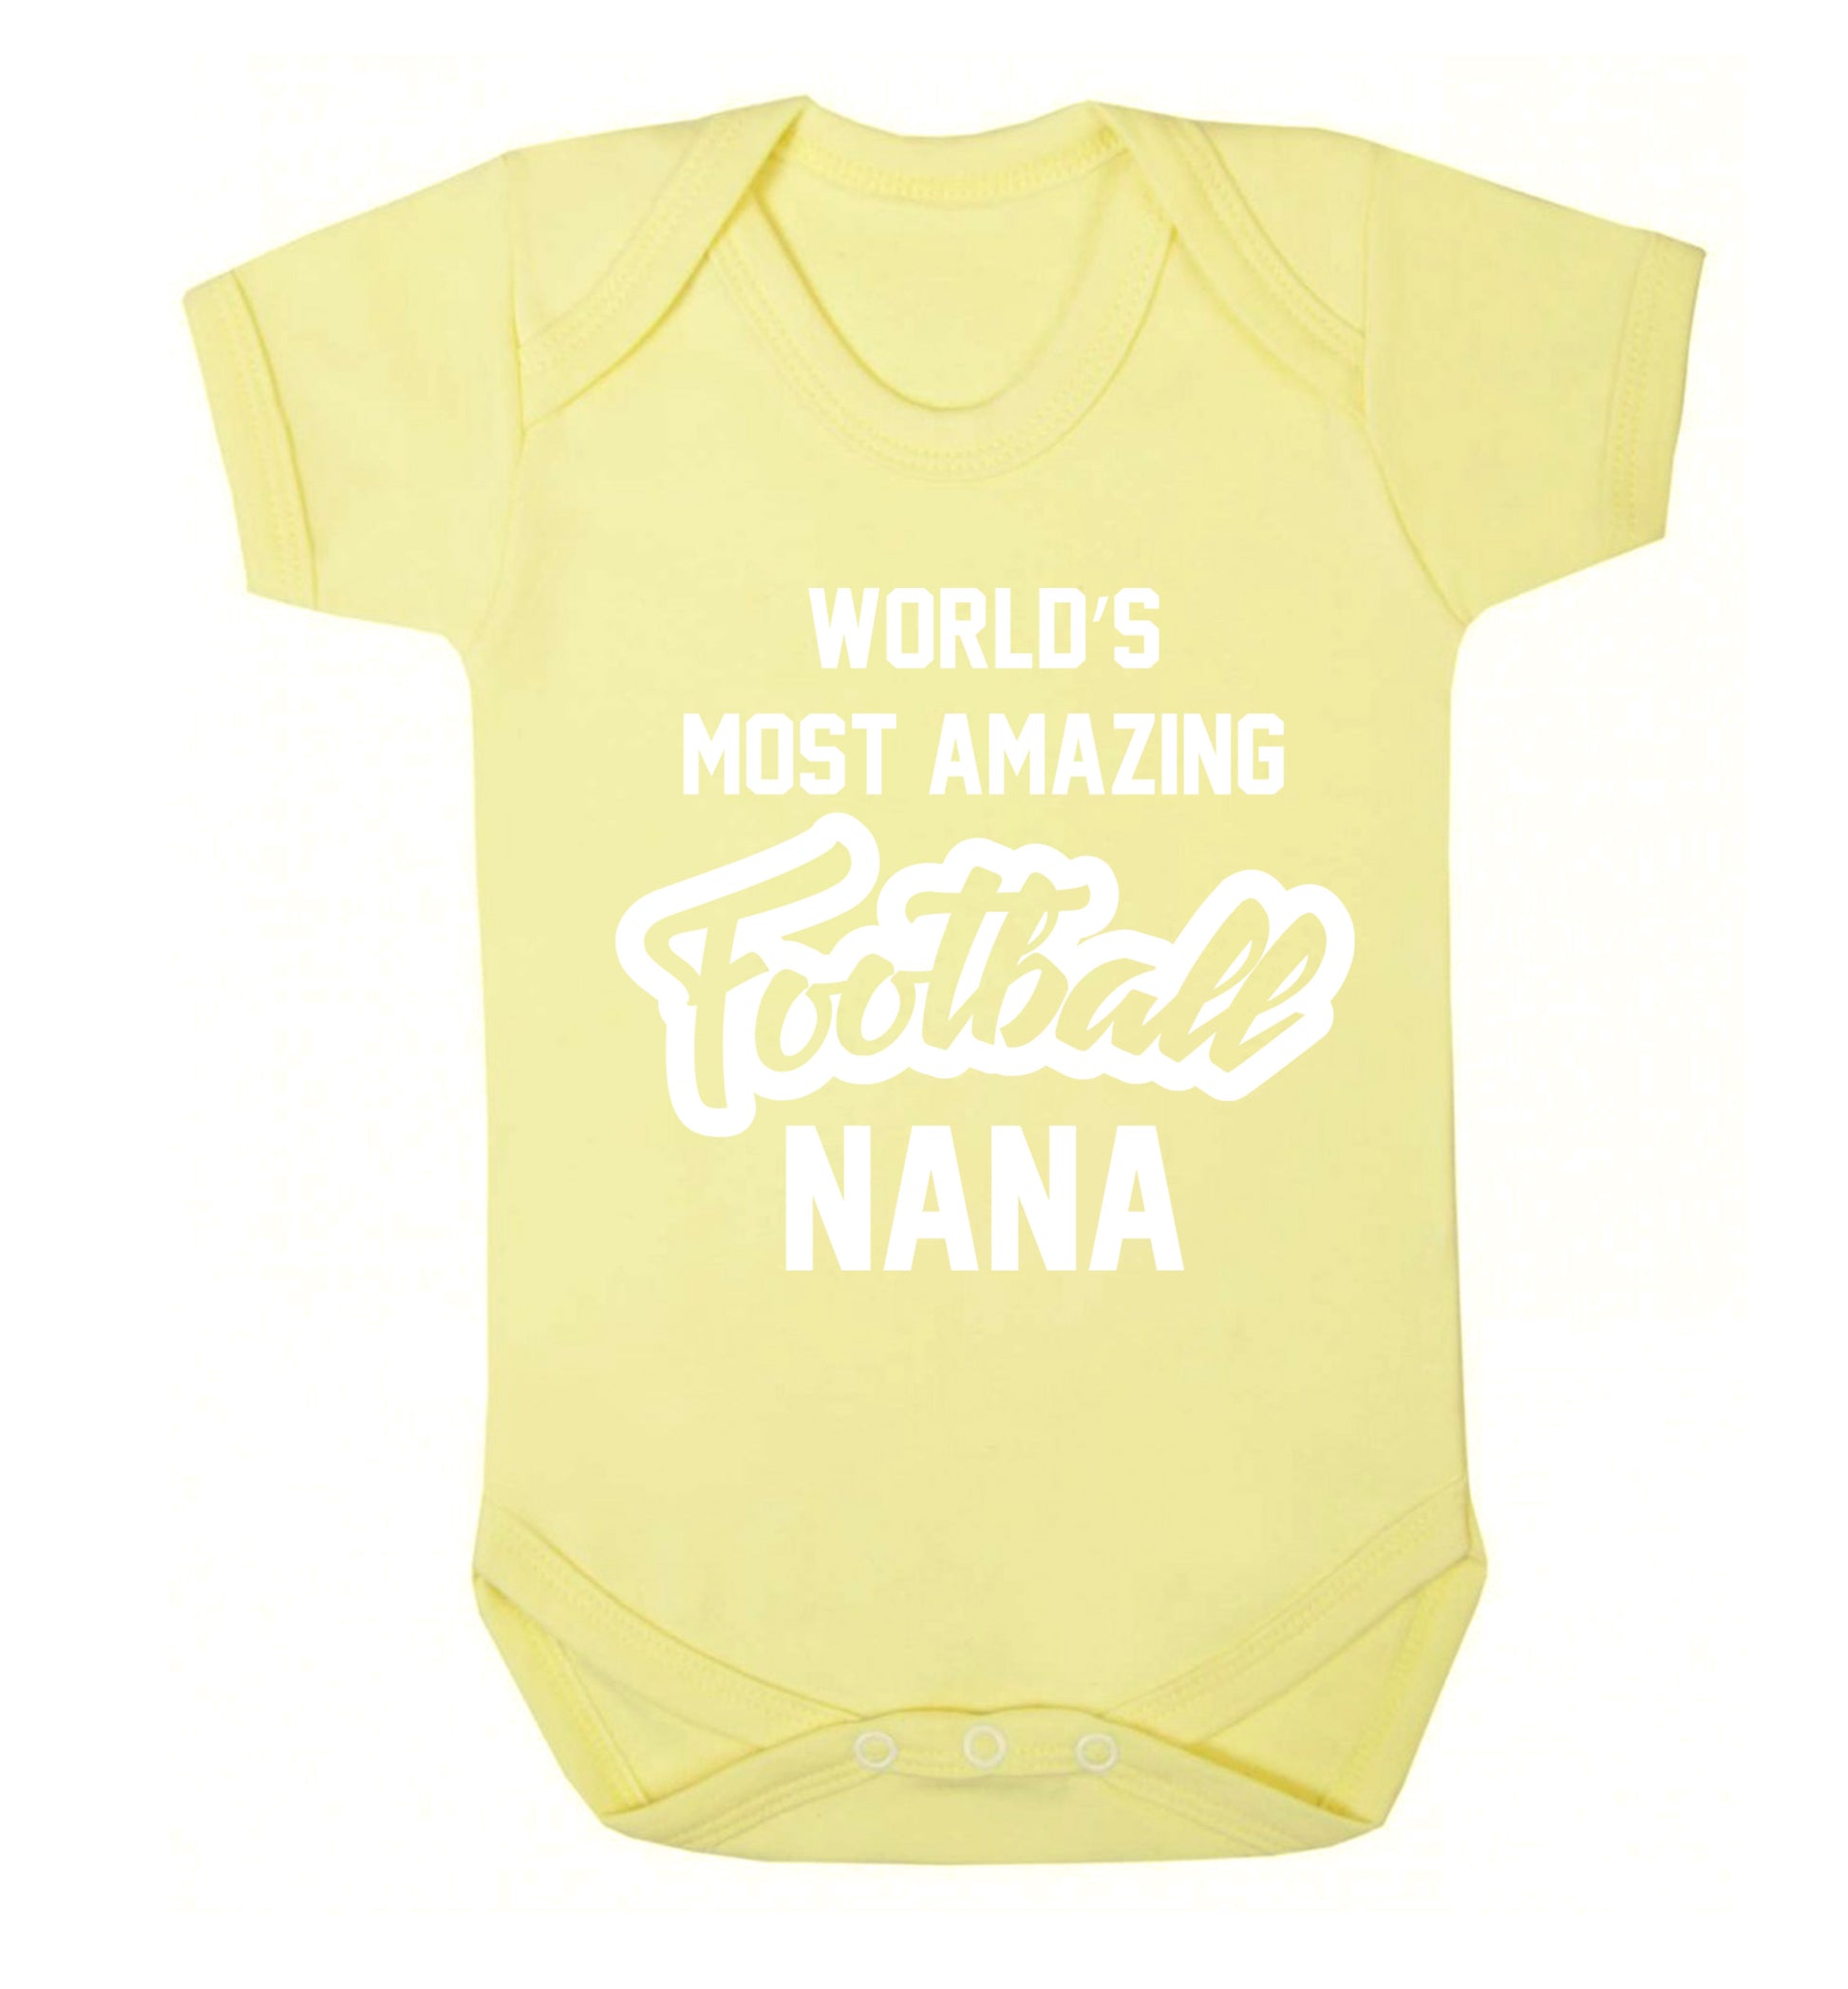 Worlds most amazing football nana Baby Vest pale yellow 18-24 months